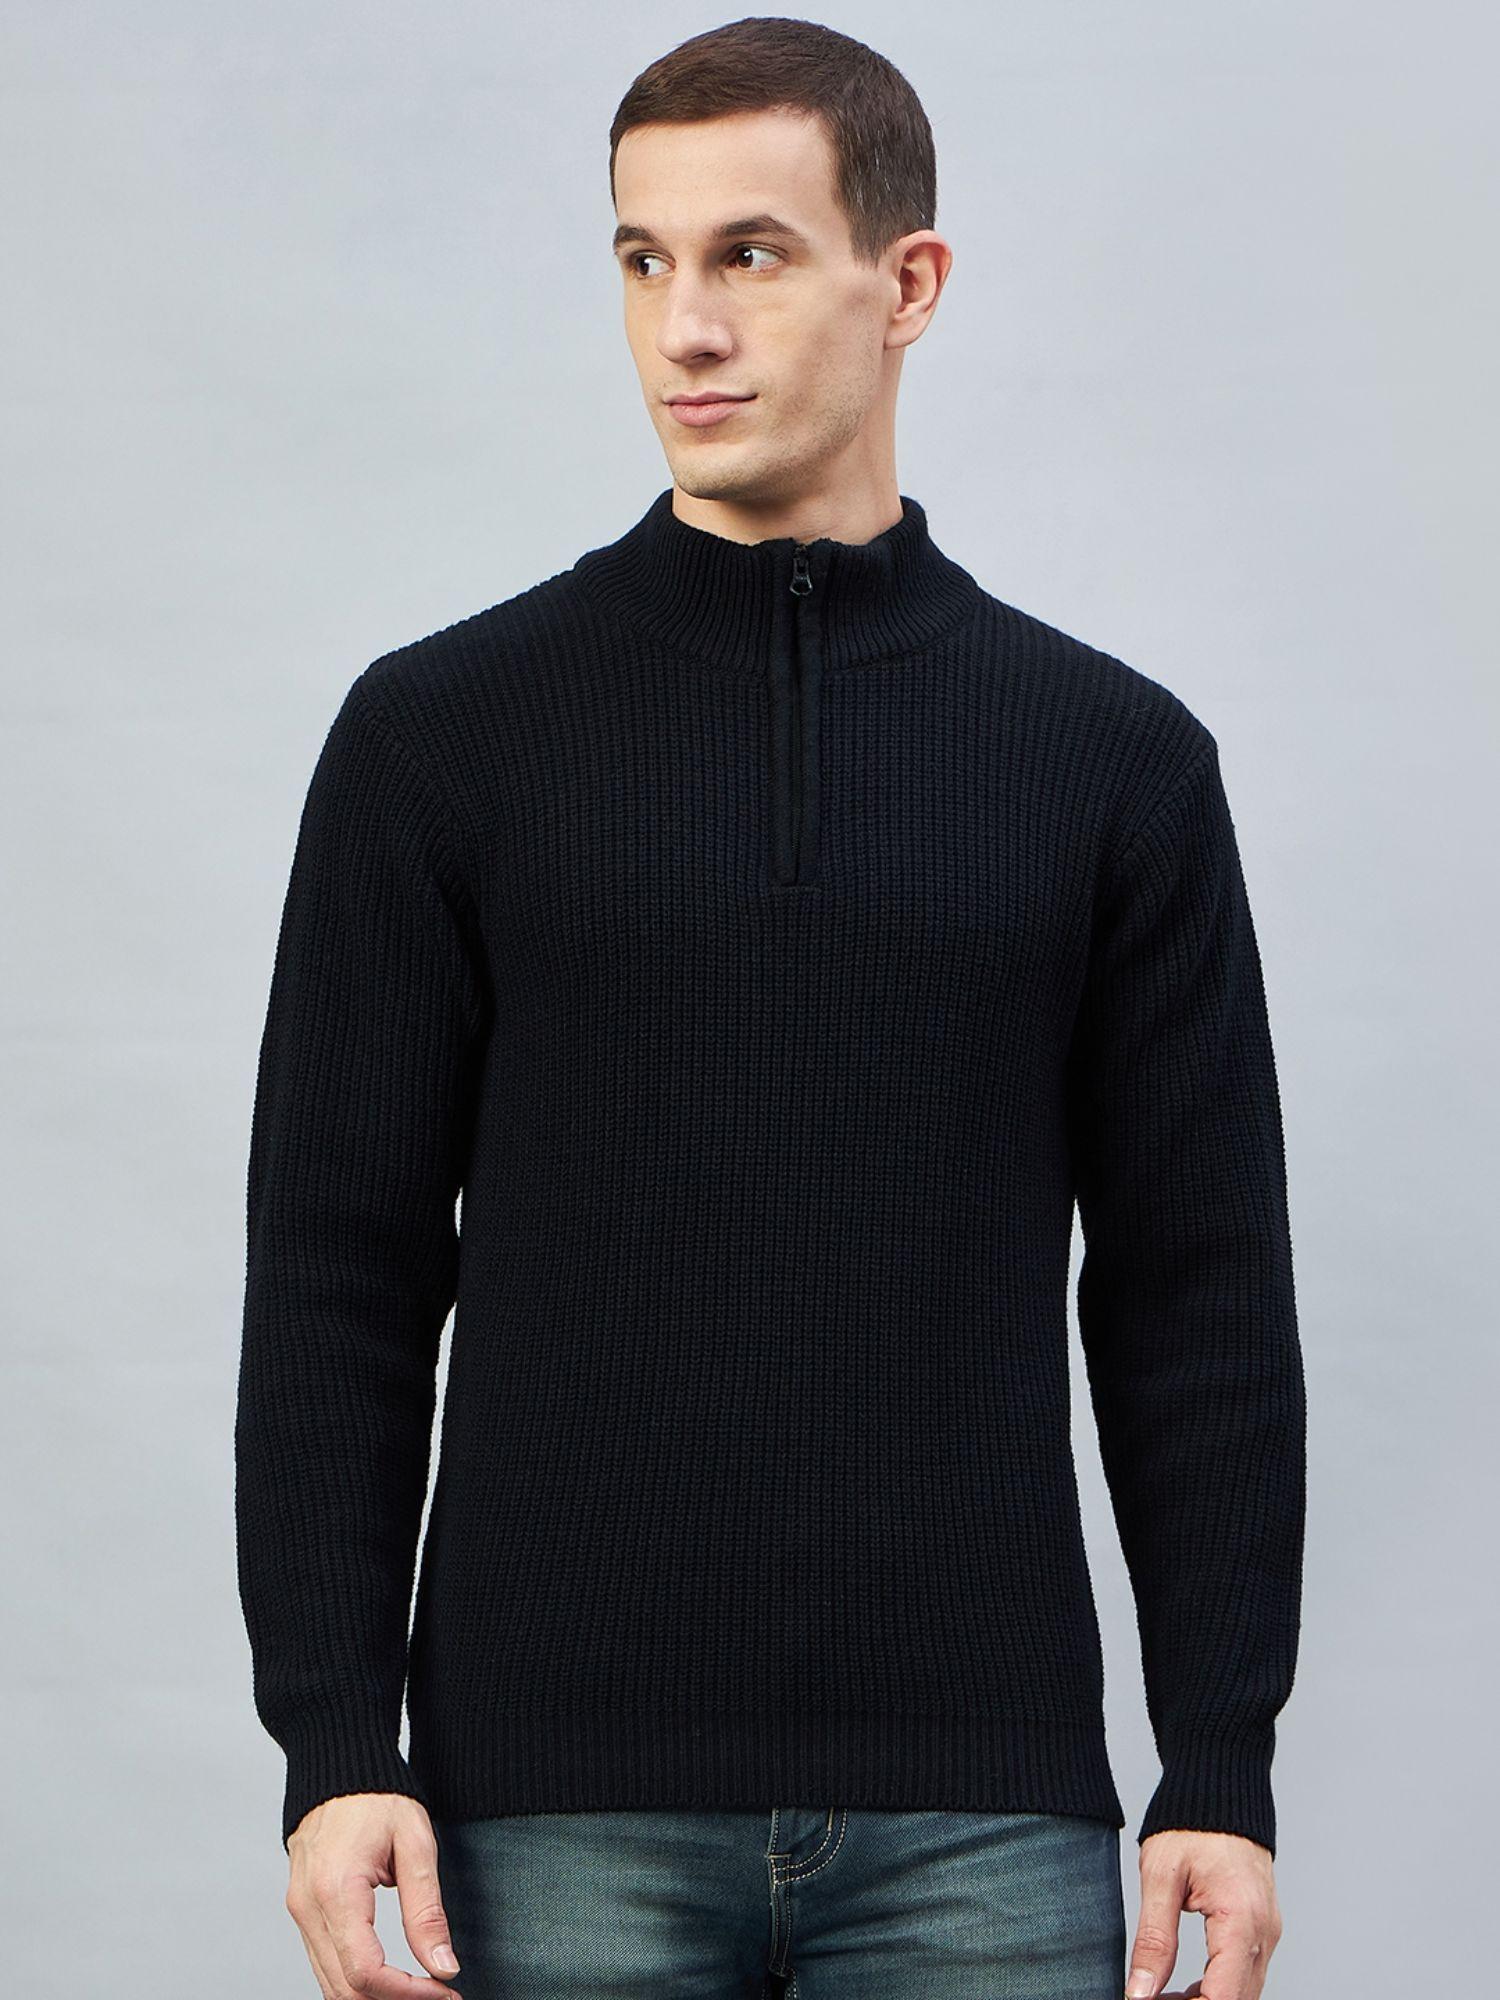 black high neck sweater